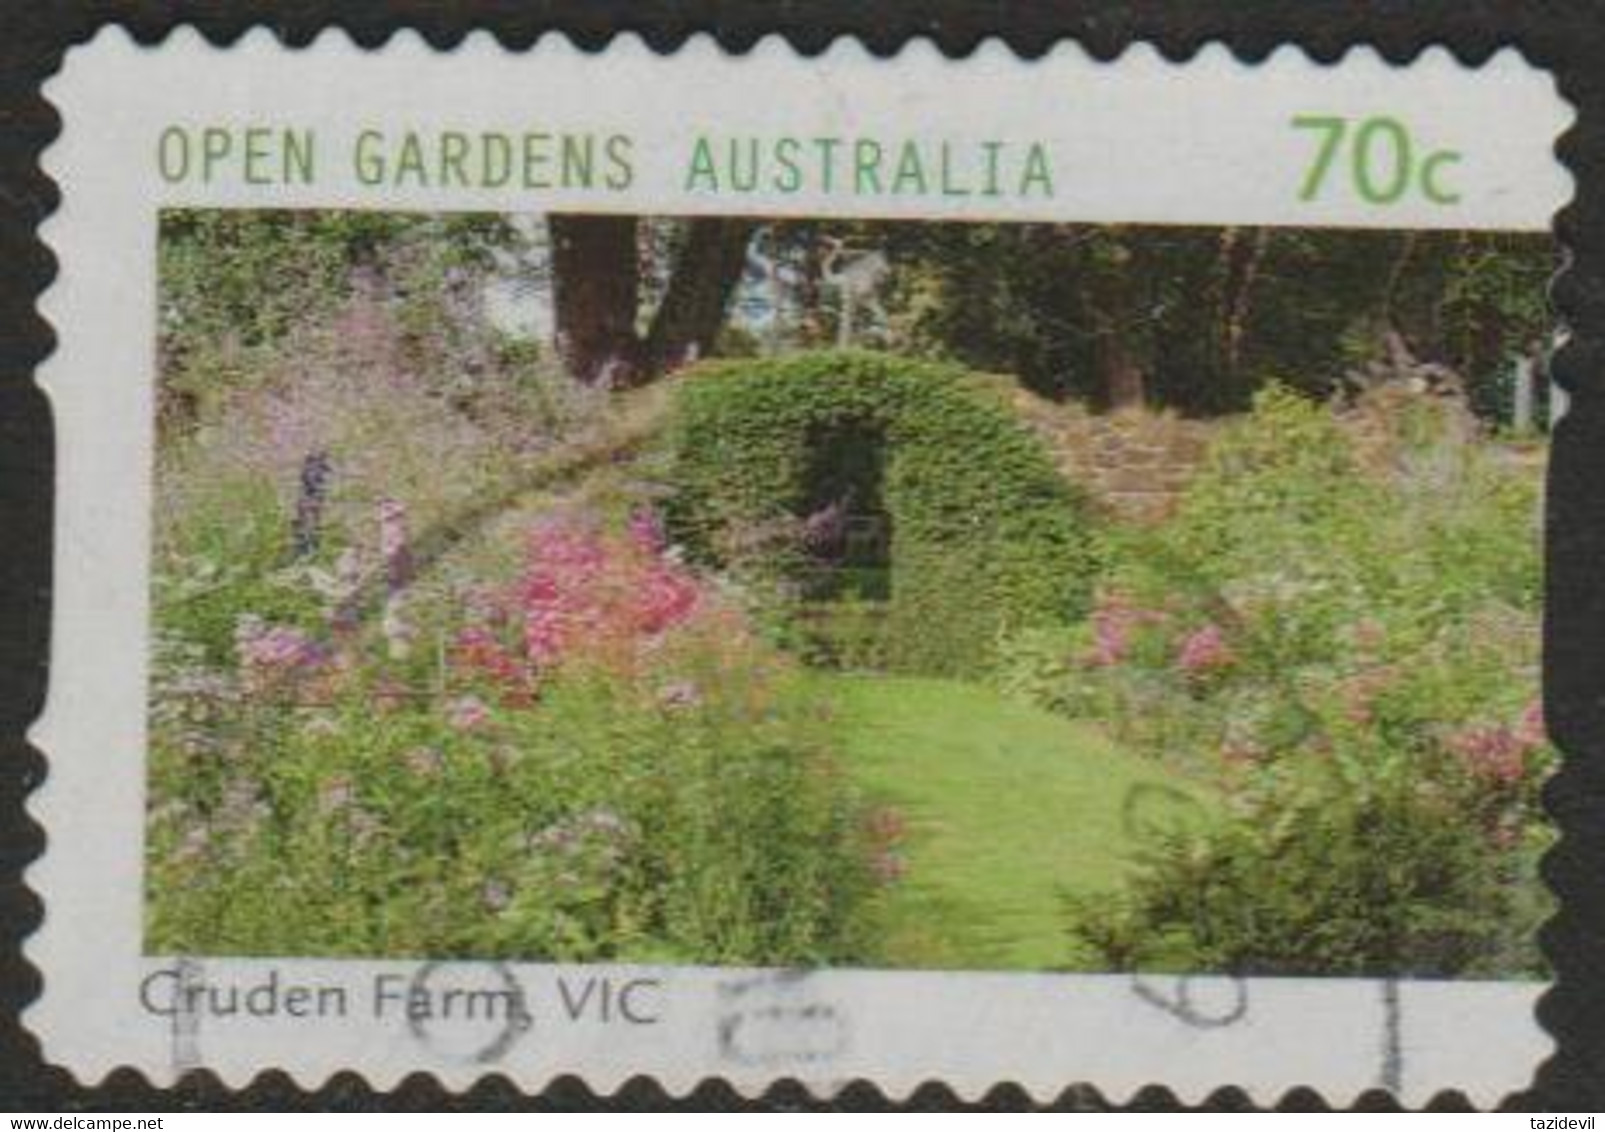 AUSTRALIA - DIE-CUT- USED 2014 70c Open Gardens - Cruden Farm, Victoria - Used Stamps